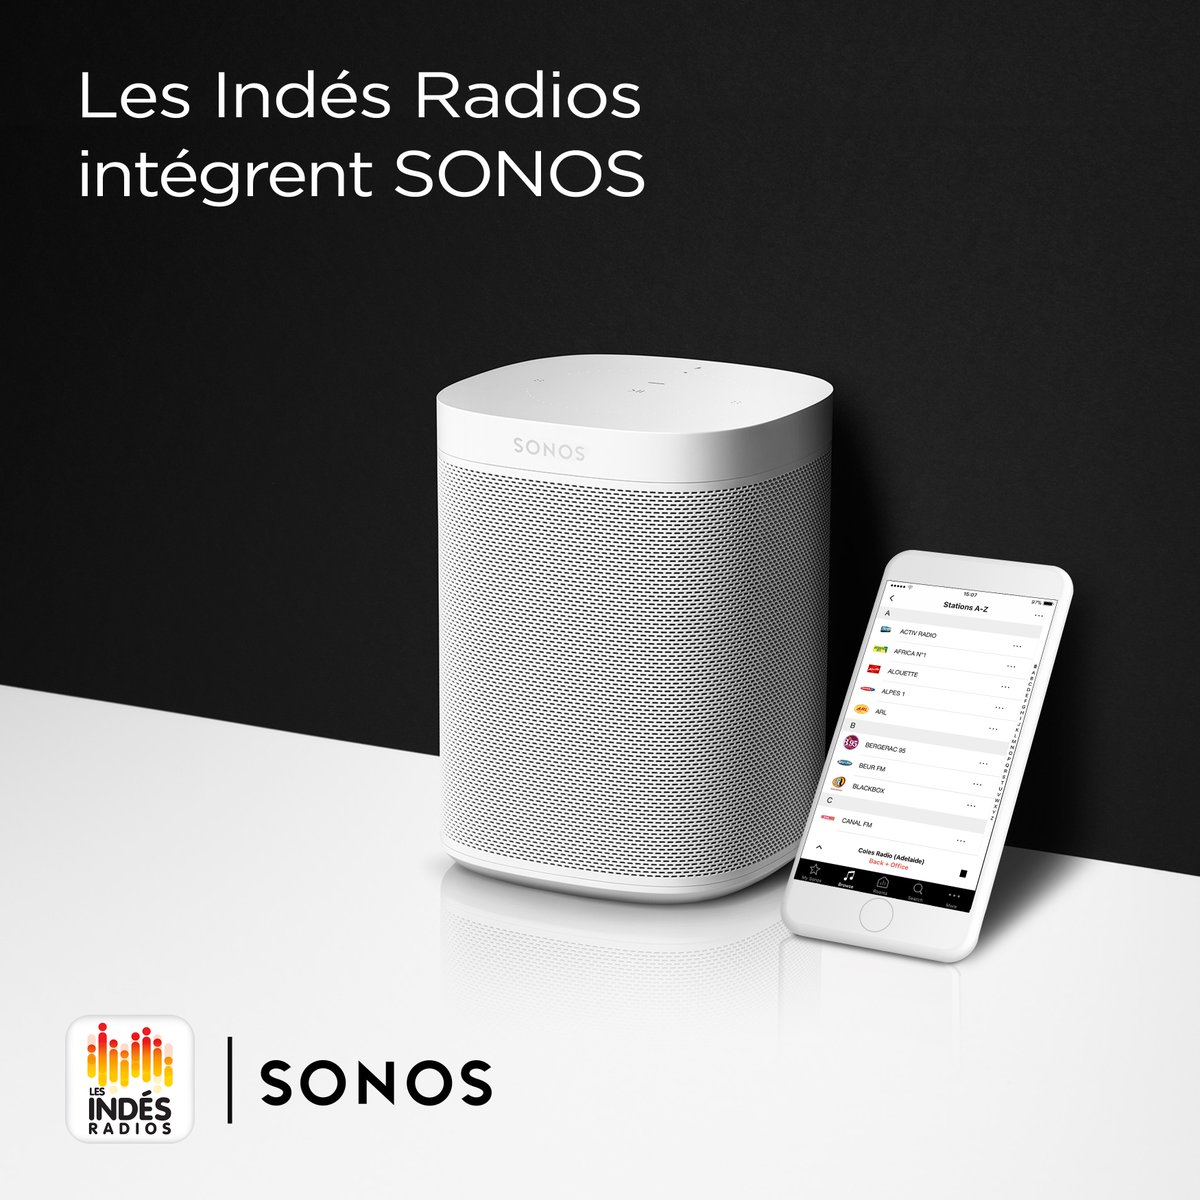 Les 131 radios des Indés Radios intègrent Sonos